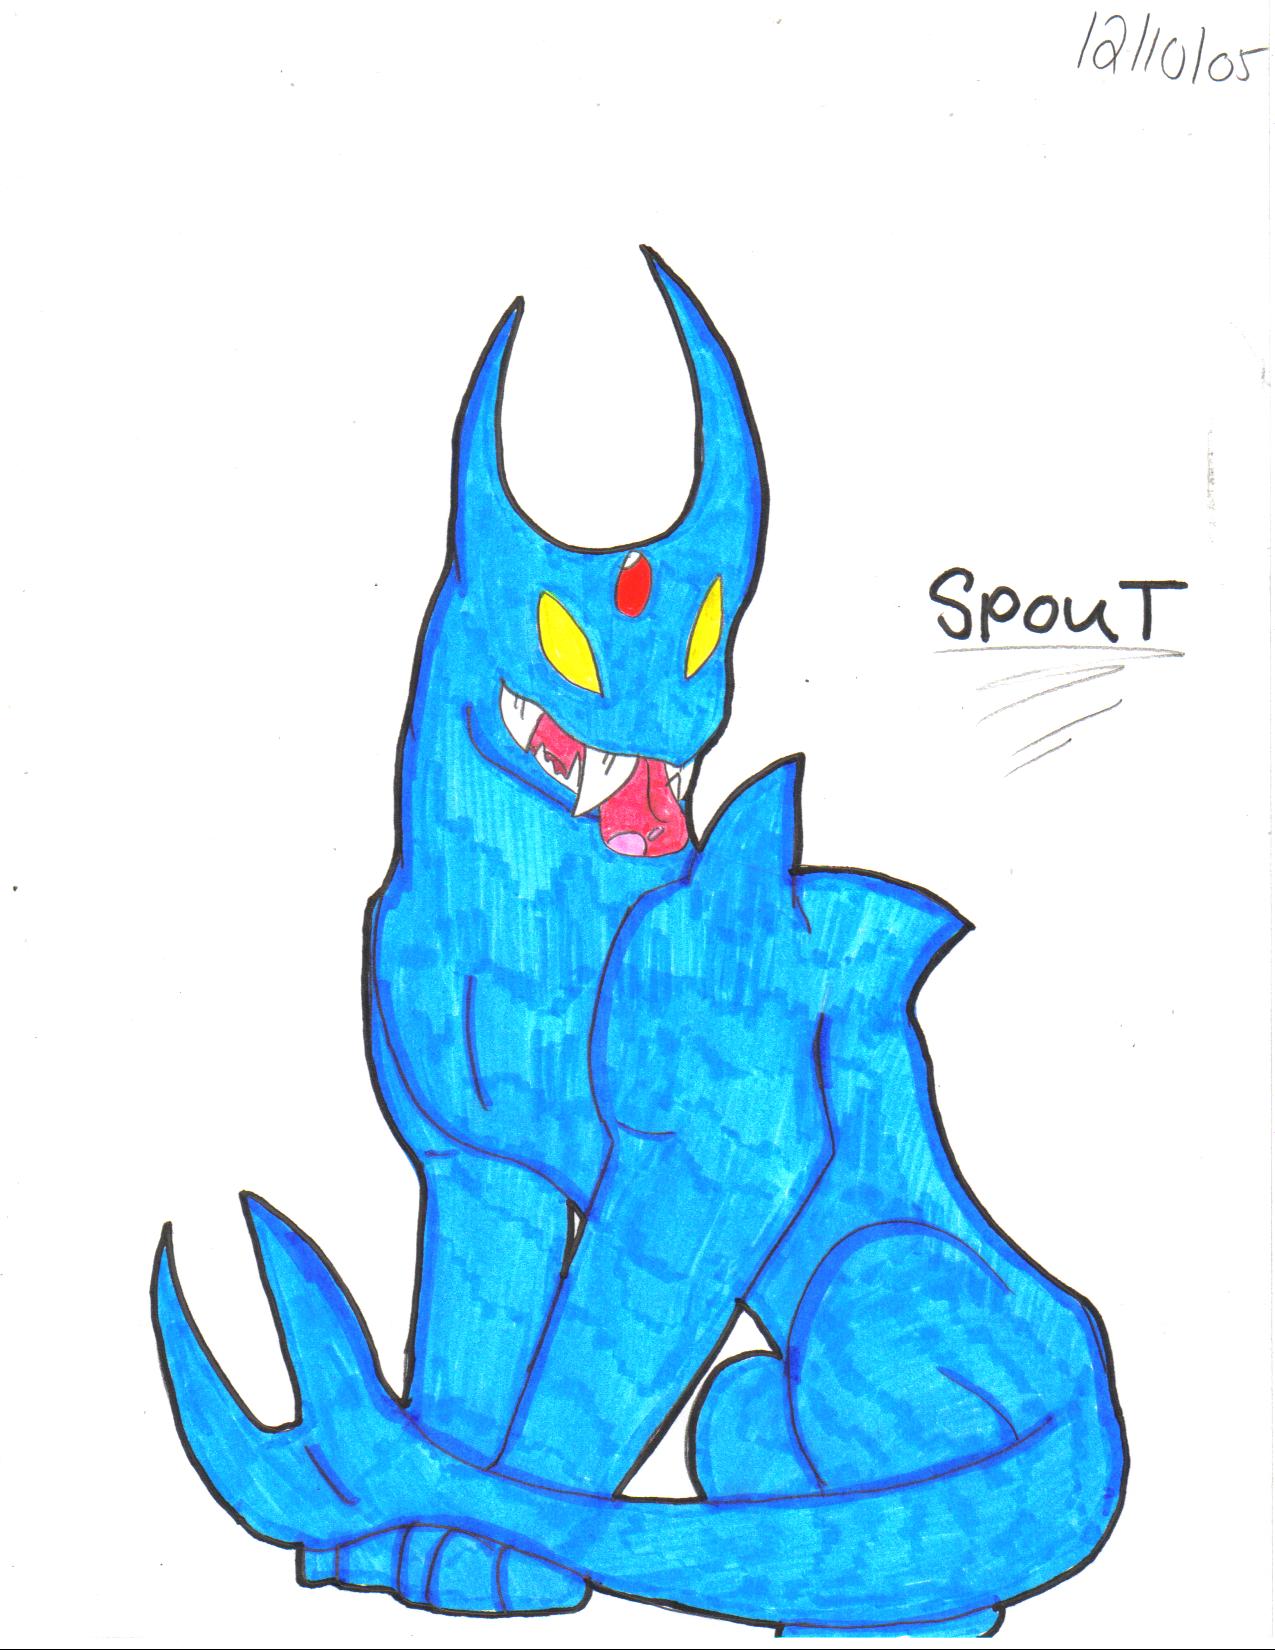 Spout by crocdragon89